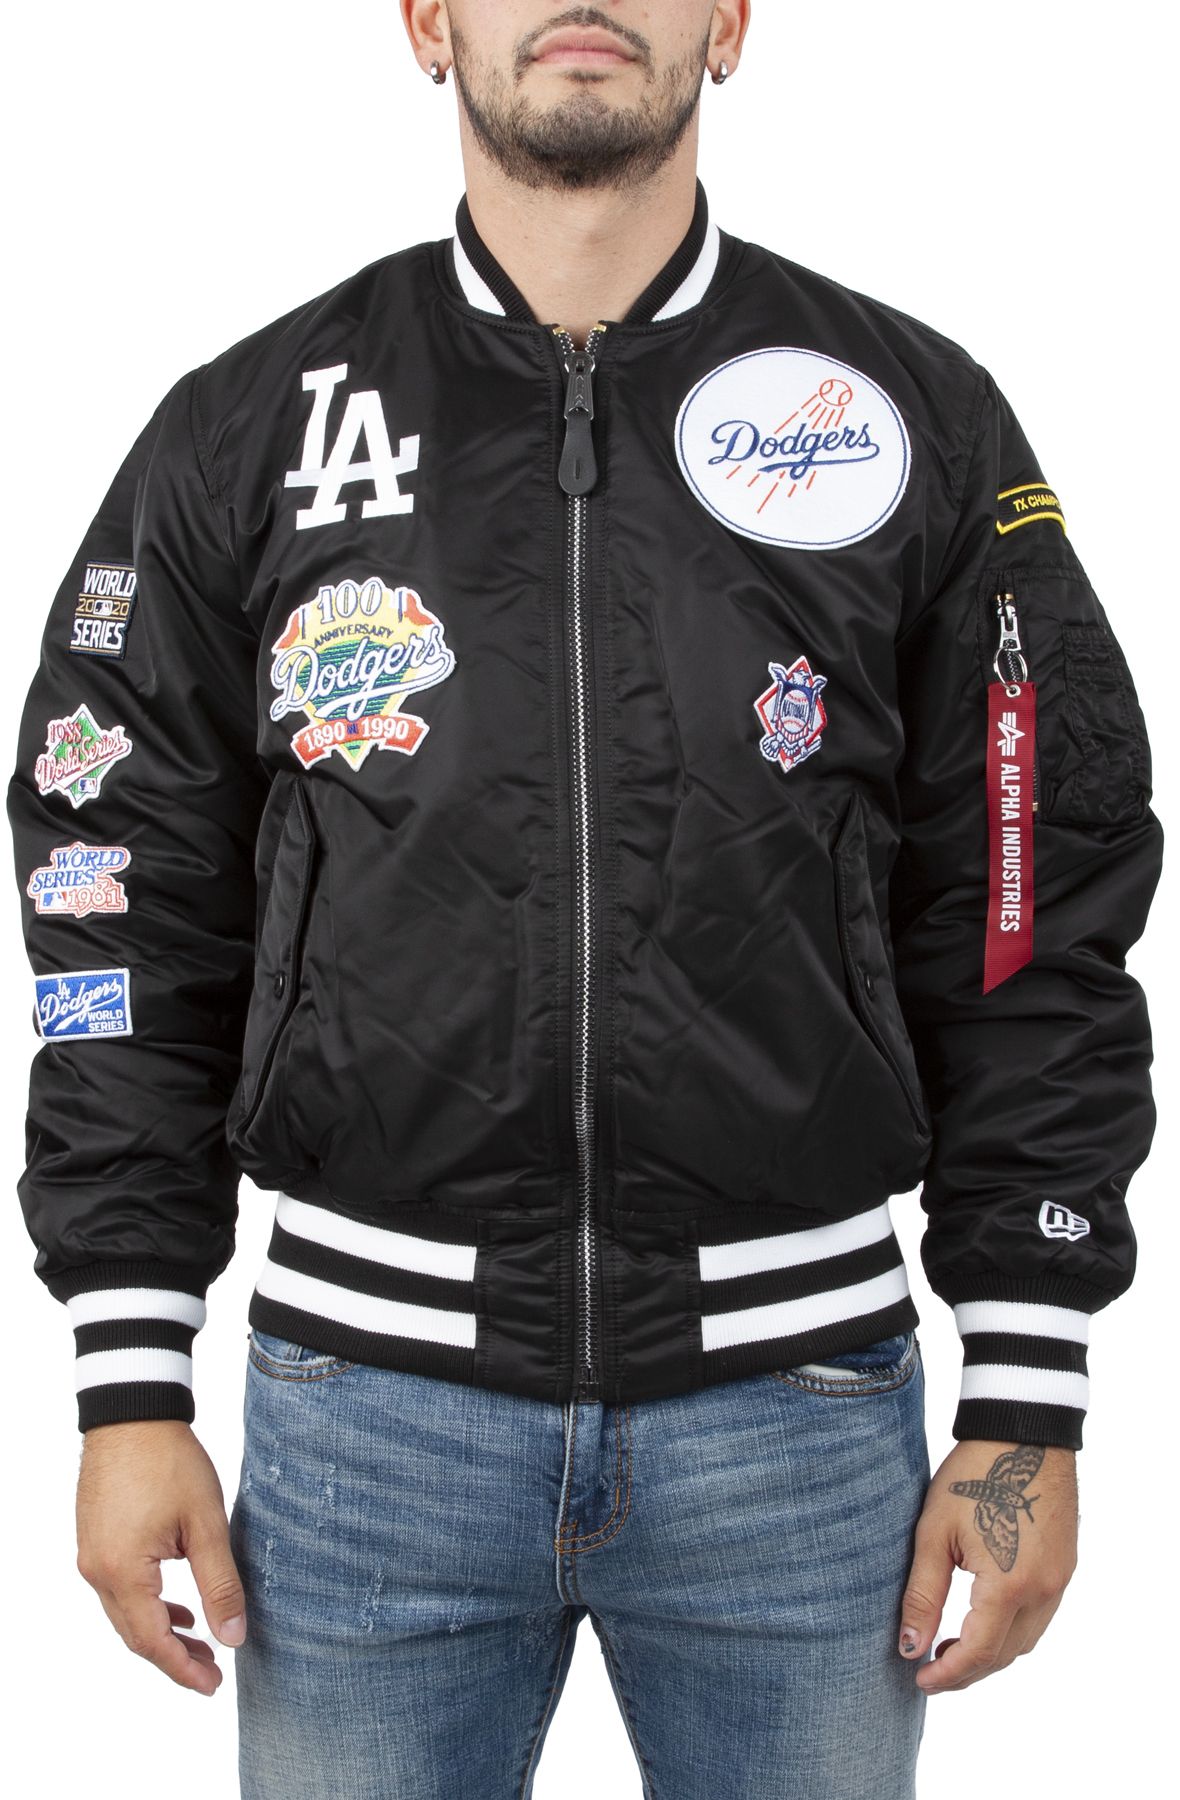 JH Design Lakers Dodgers Champions Varsity Jacket 2XL XXL